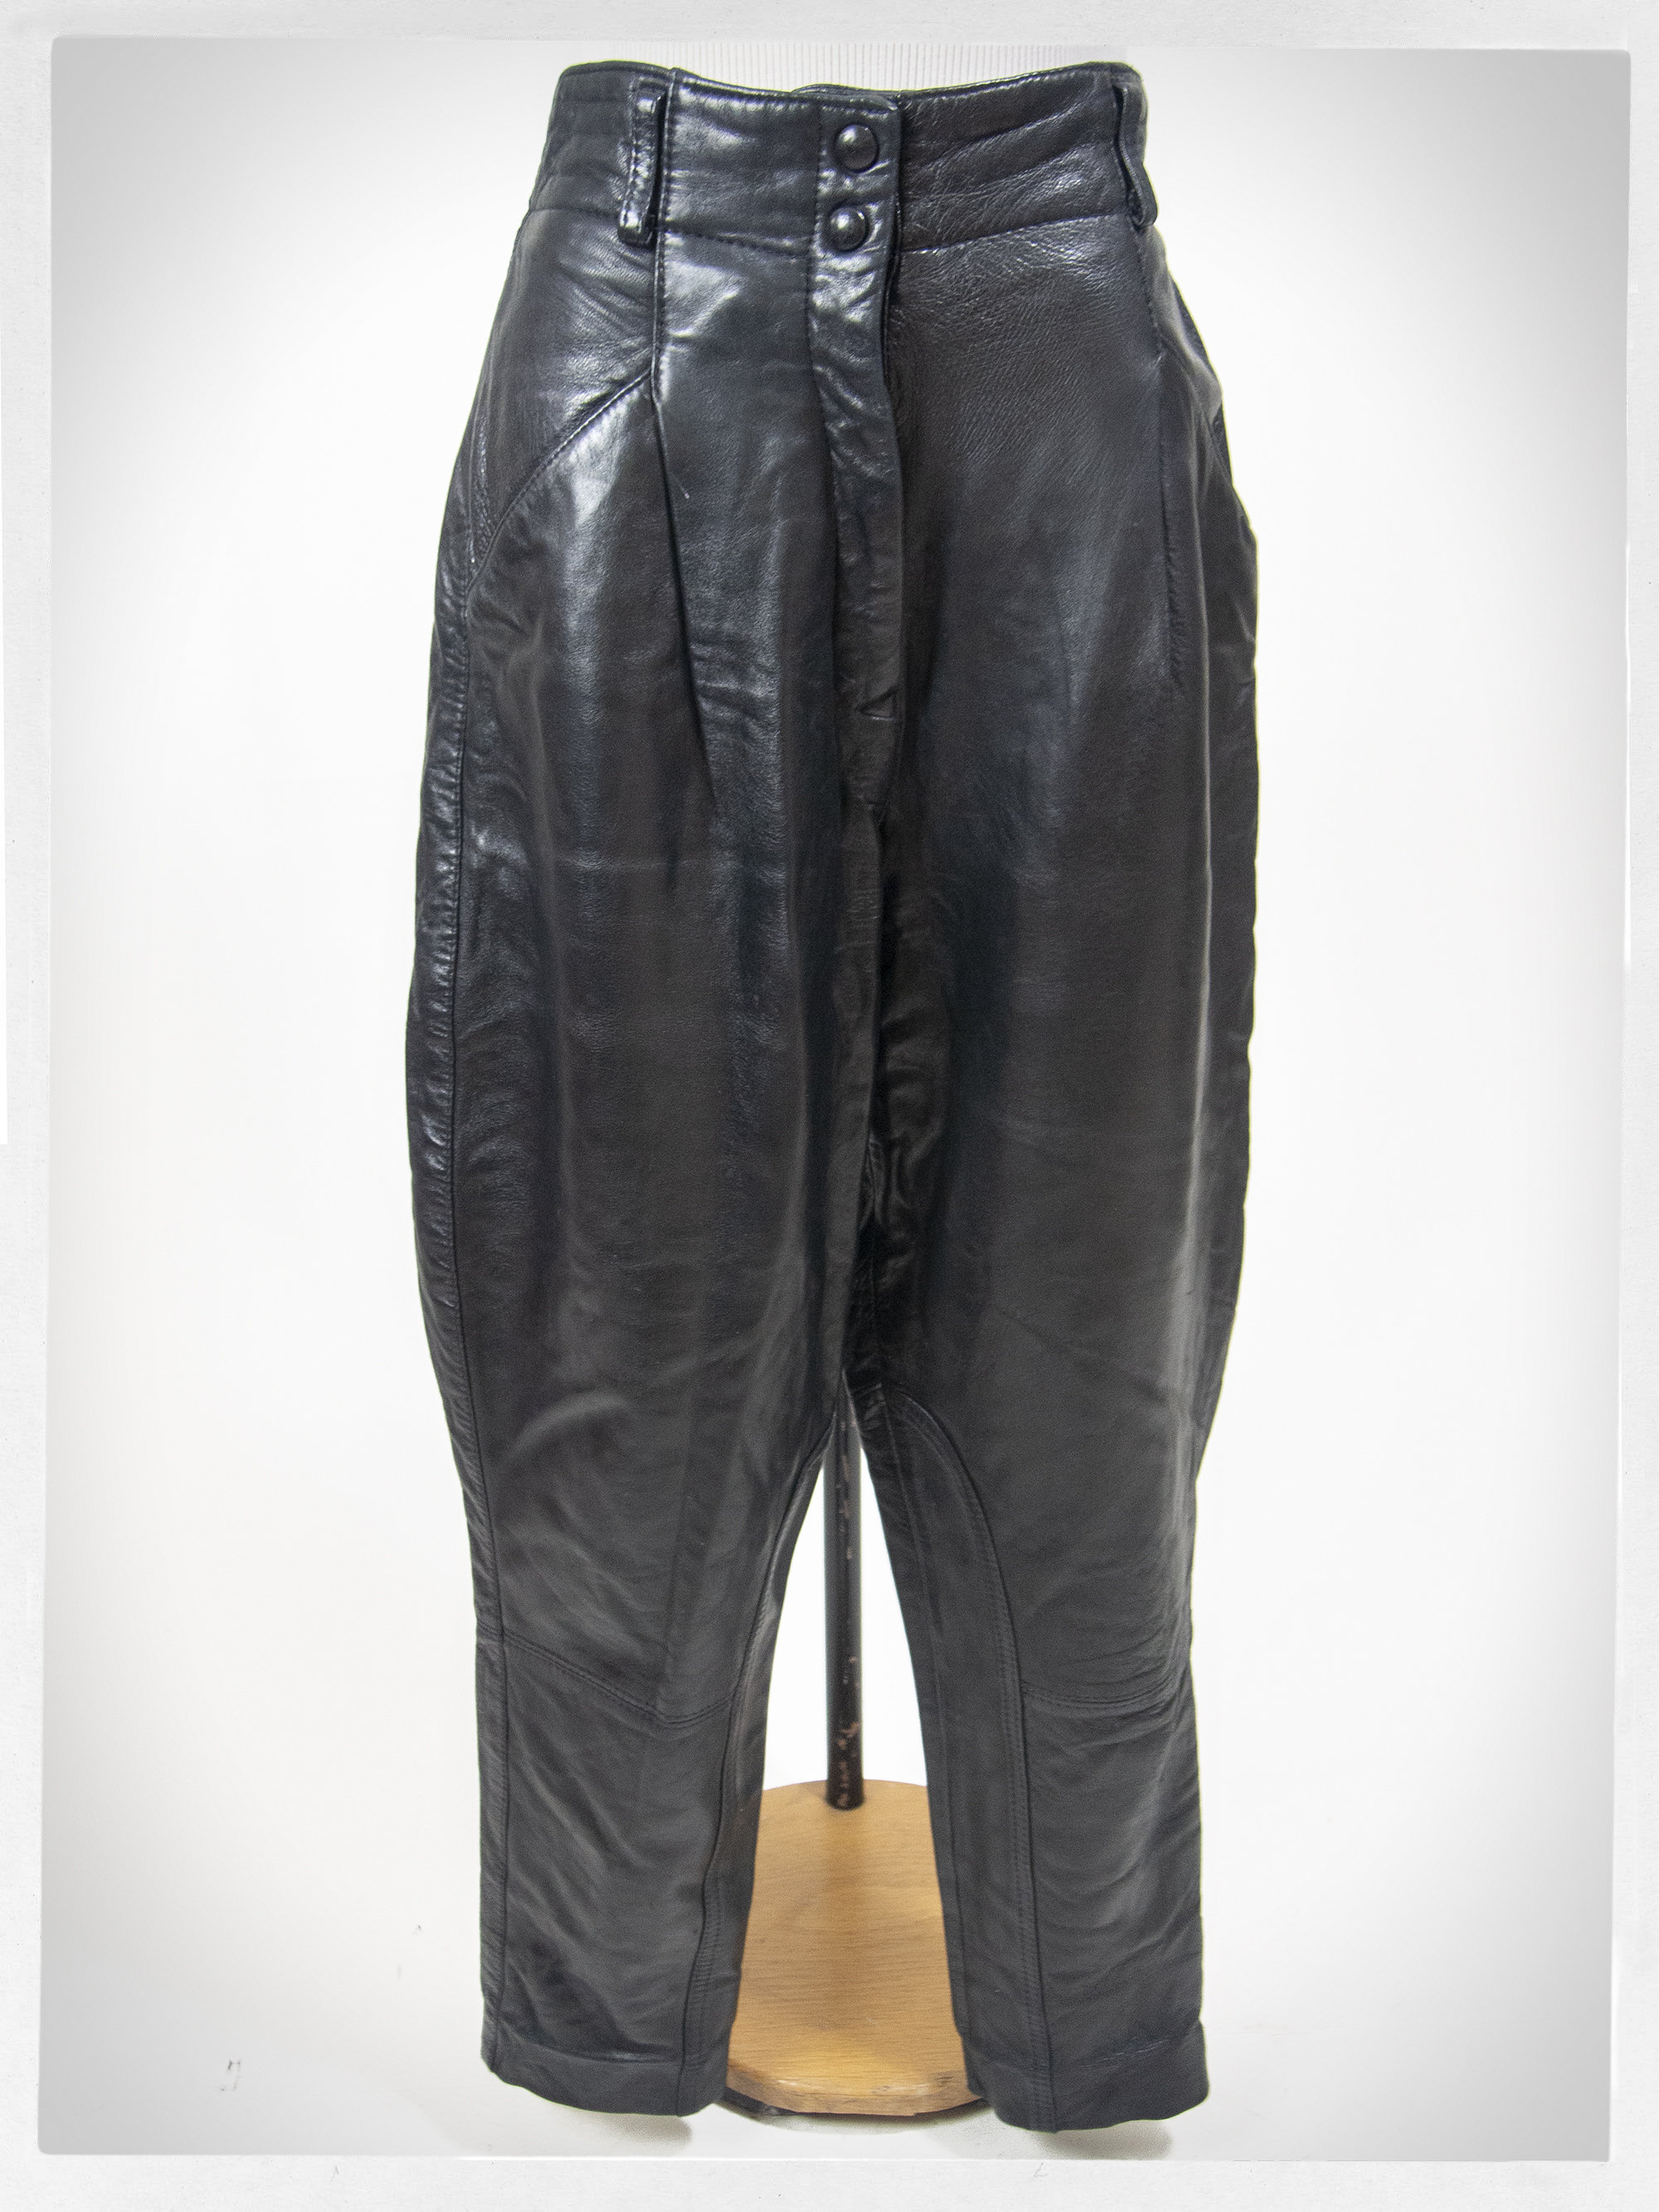 Retro 70s Leather Pants 80s leather JODHPURS Creeds of | Etsy